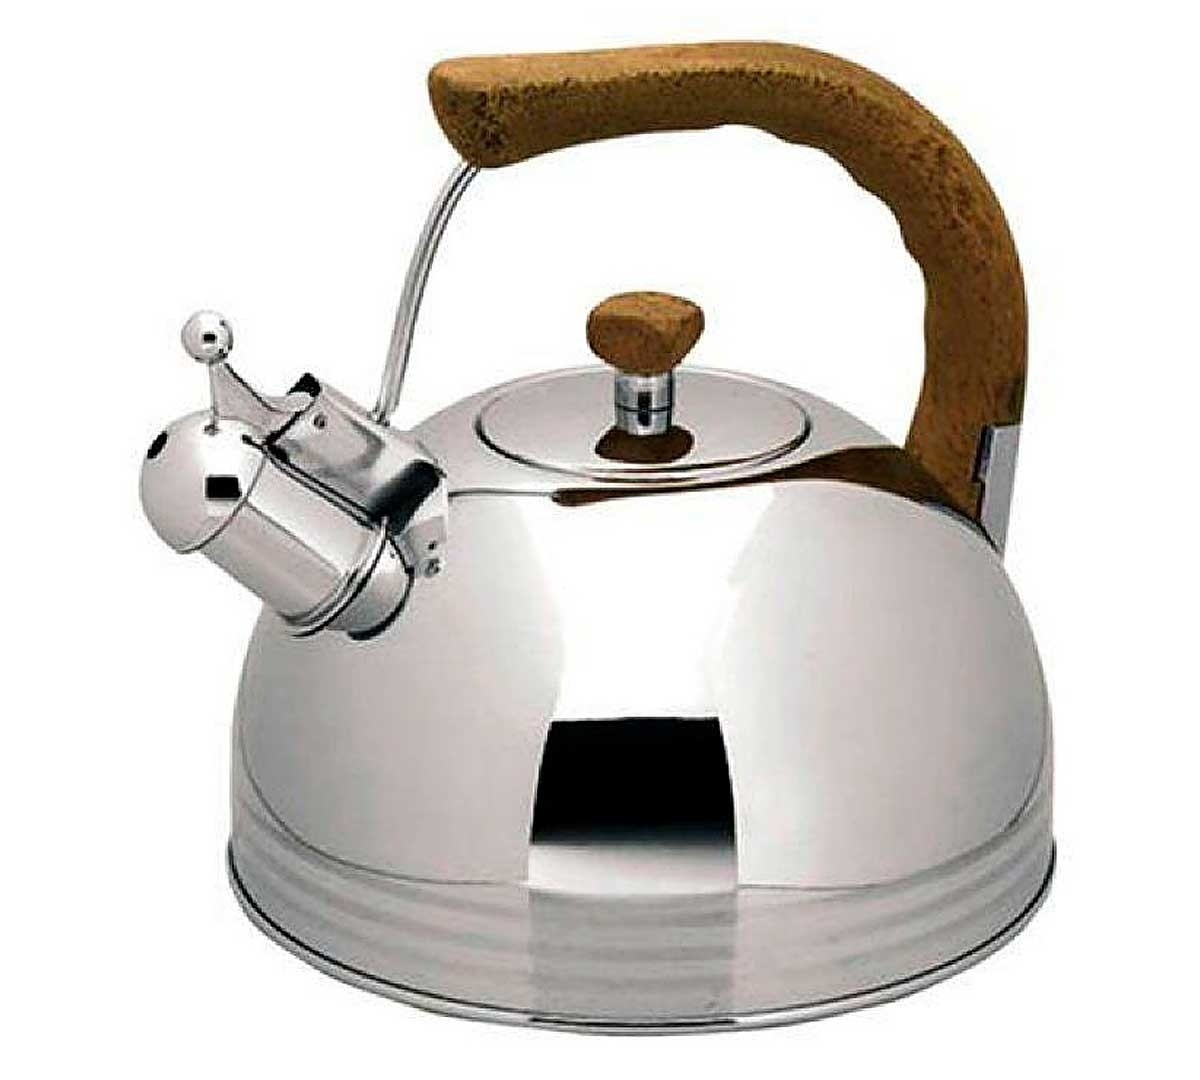 https://foter.com/photos/title/whistling-tea-kettle-made-in-usa.jpg